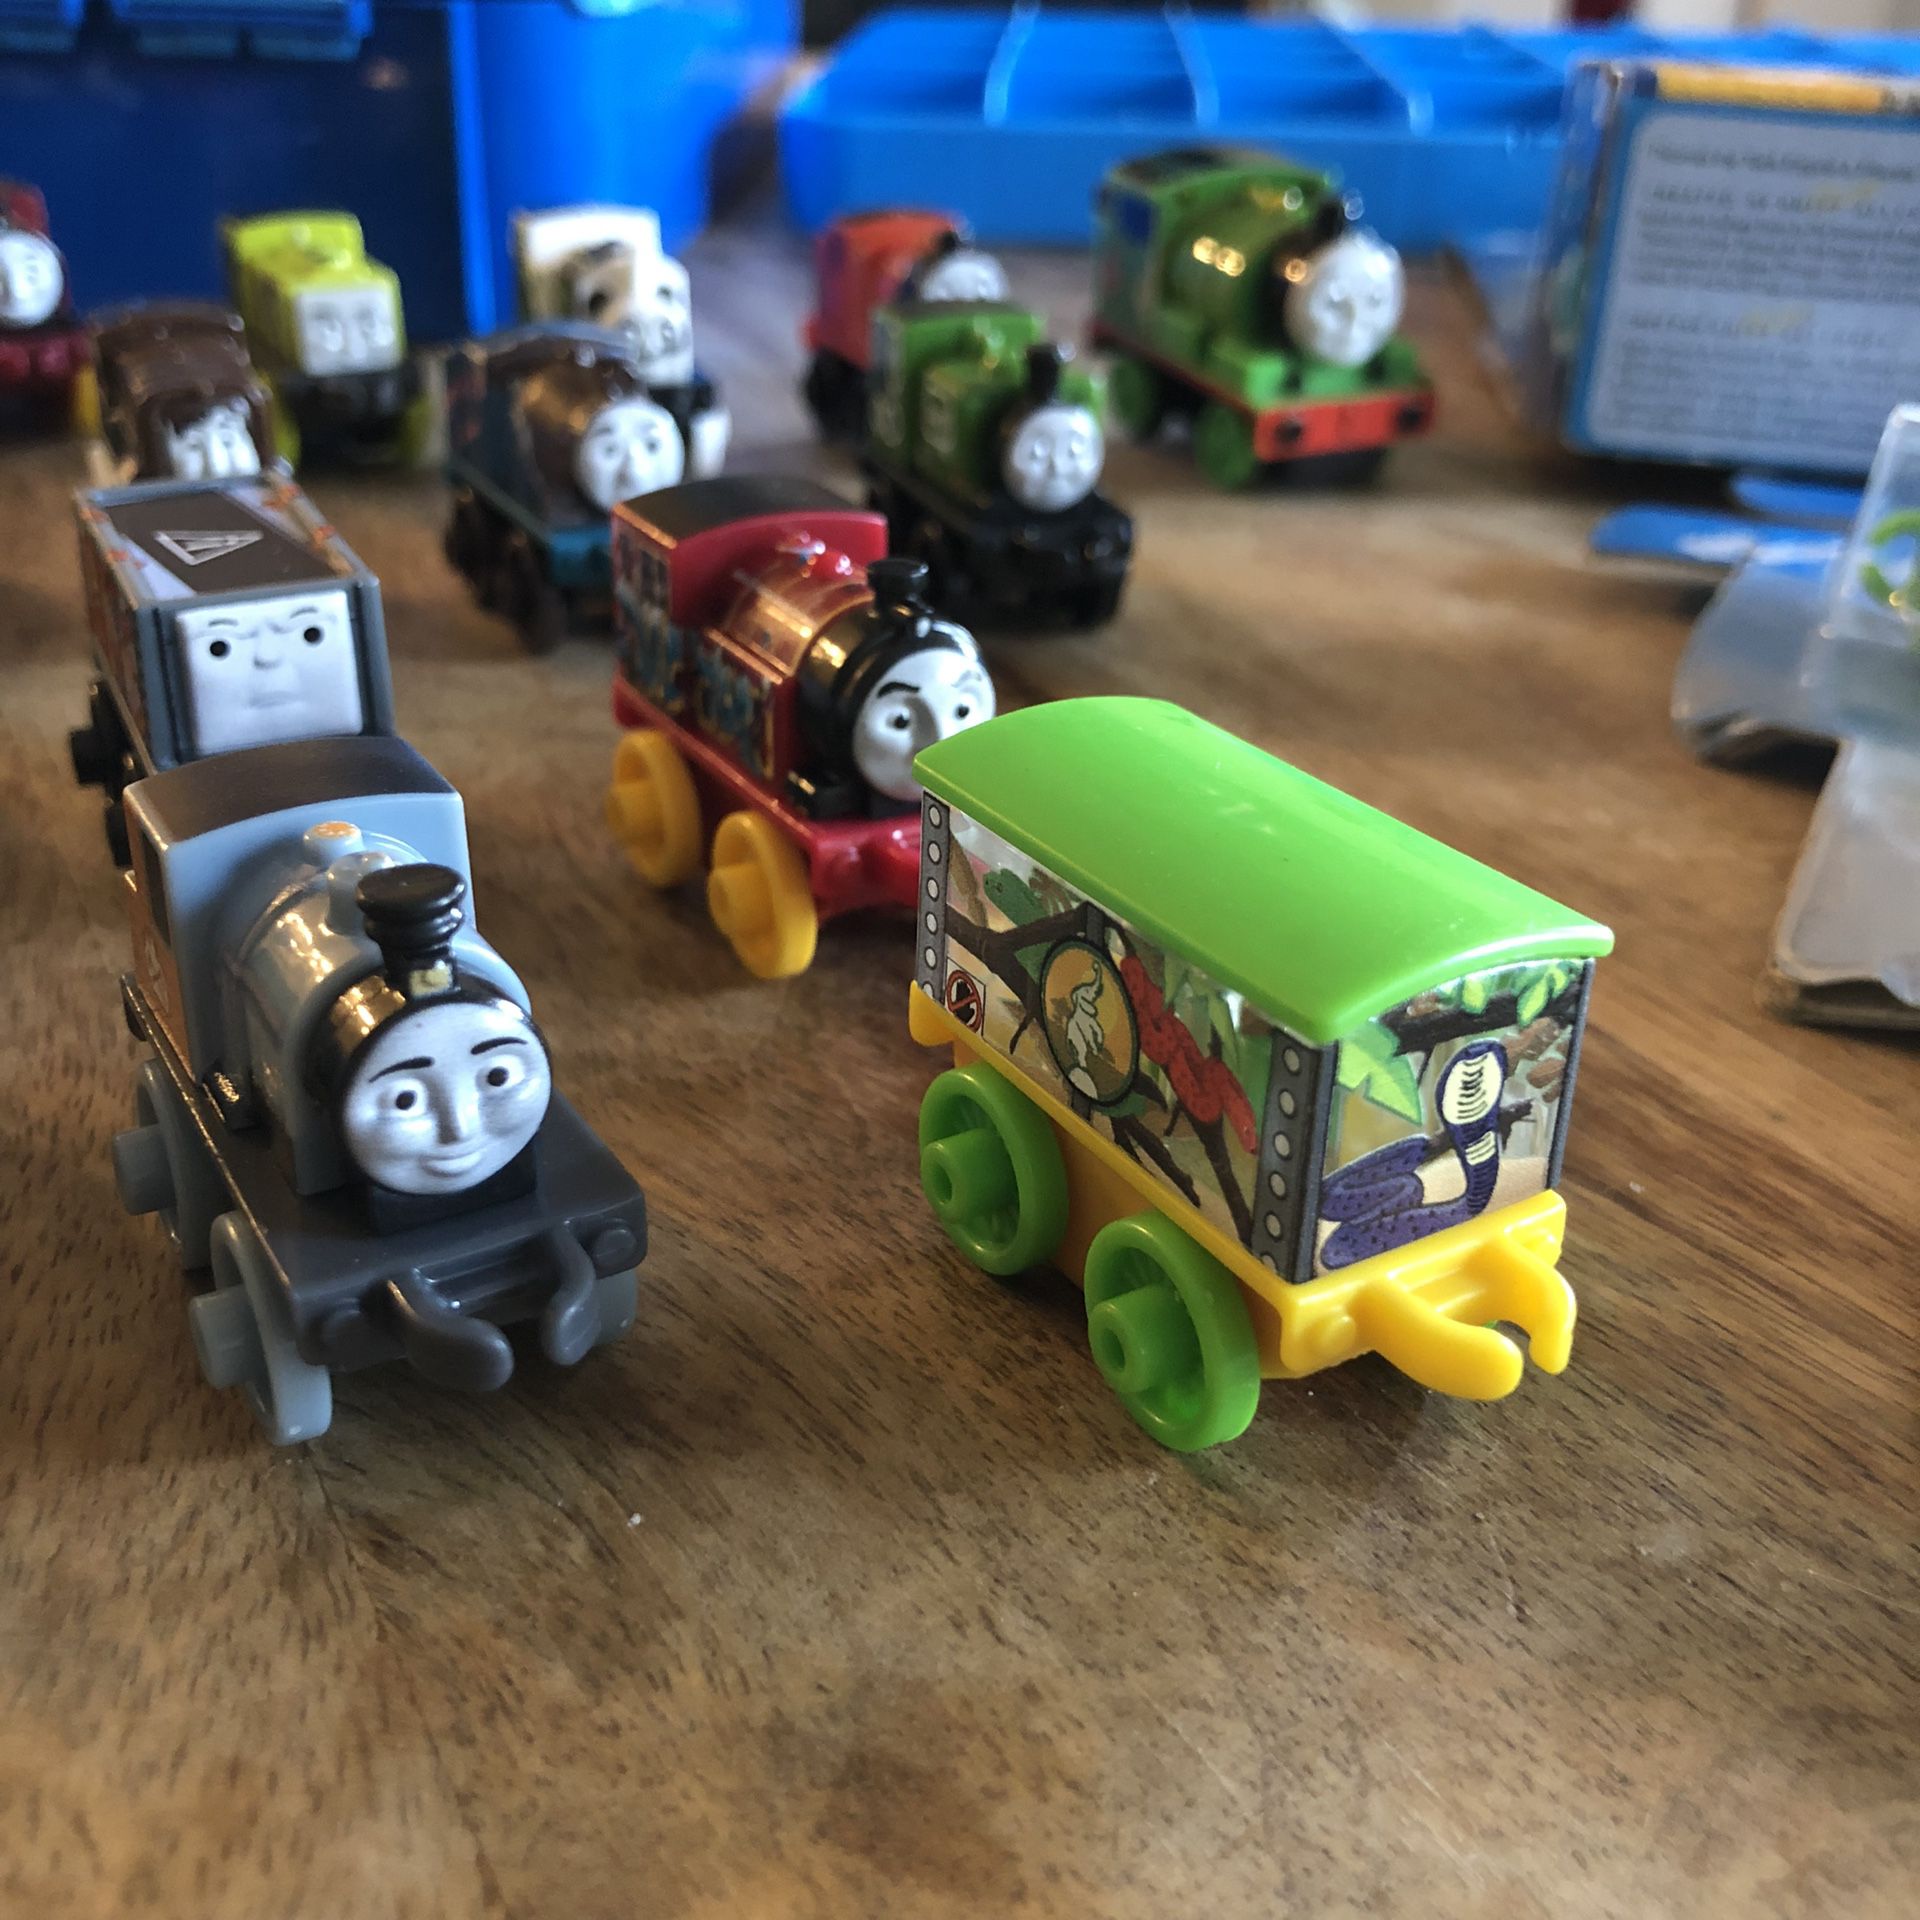 28 Thomas & Friends Minis Trains Total . Some pre own great shape and some new  Thomas & Friends MINIS - Fizz 'N Go Cargo Surprise New  Thomas and Fri